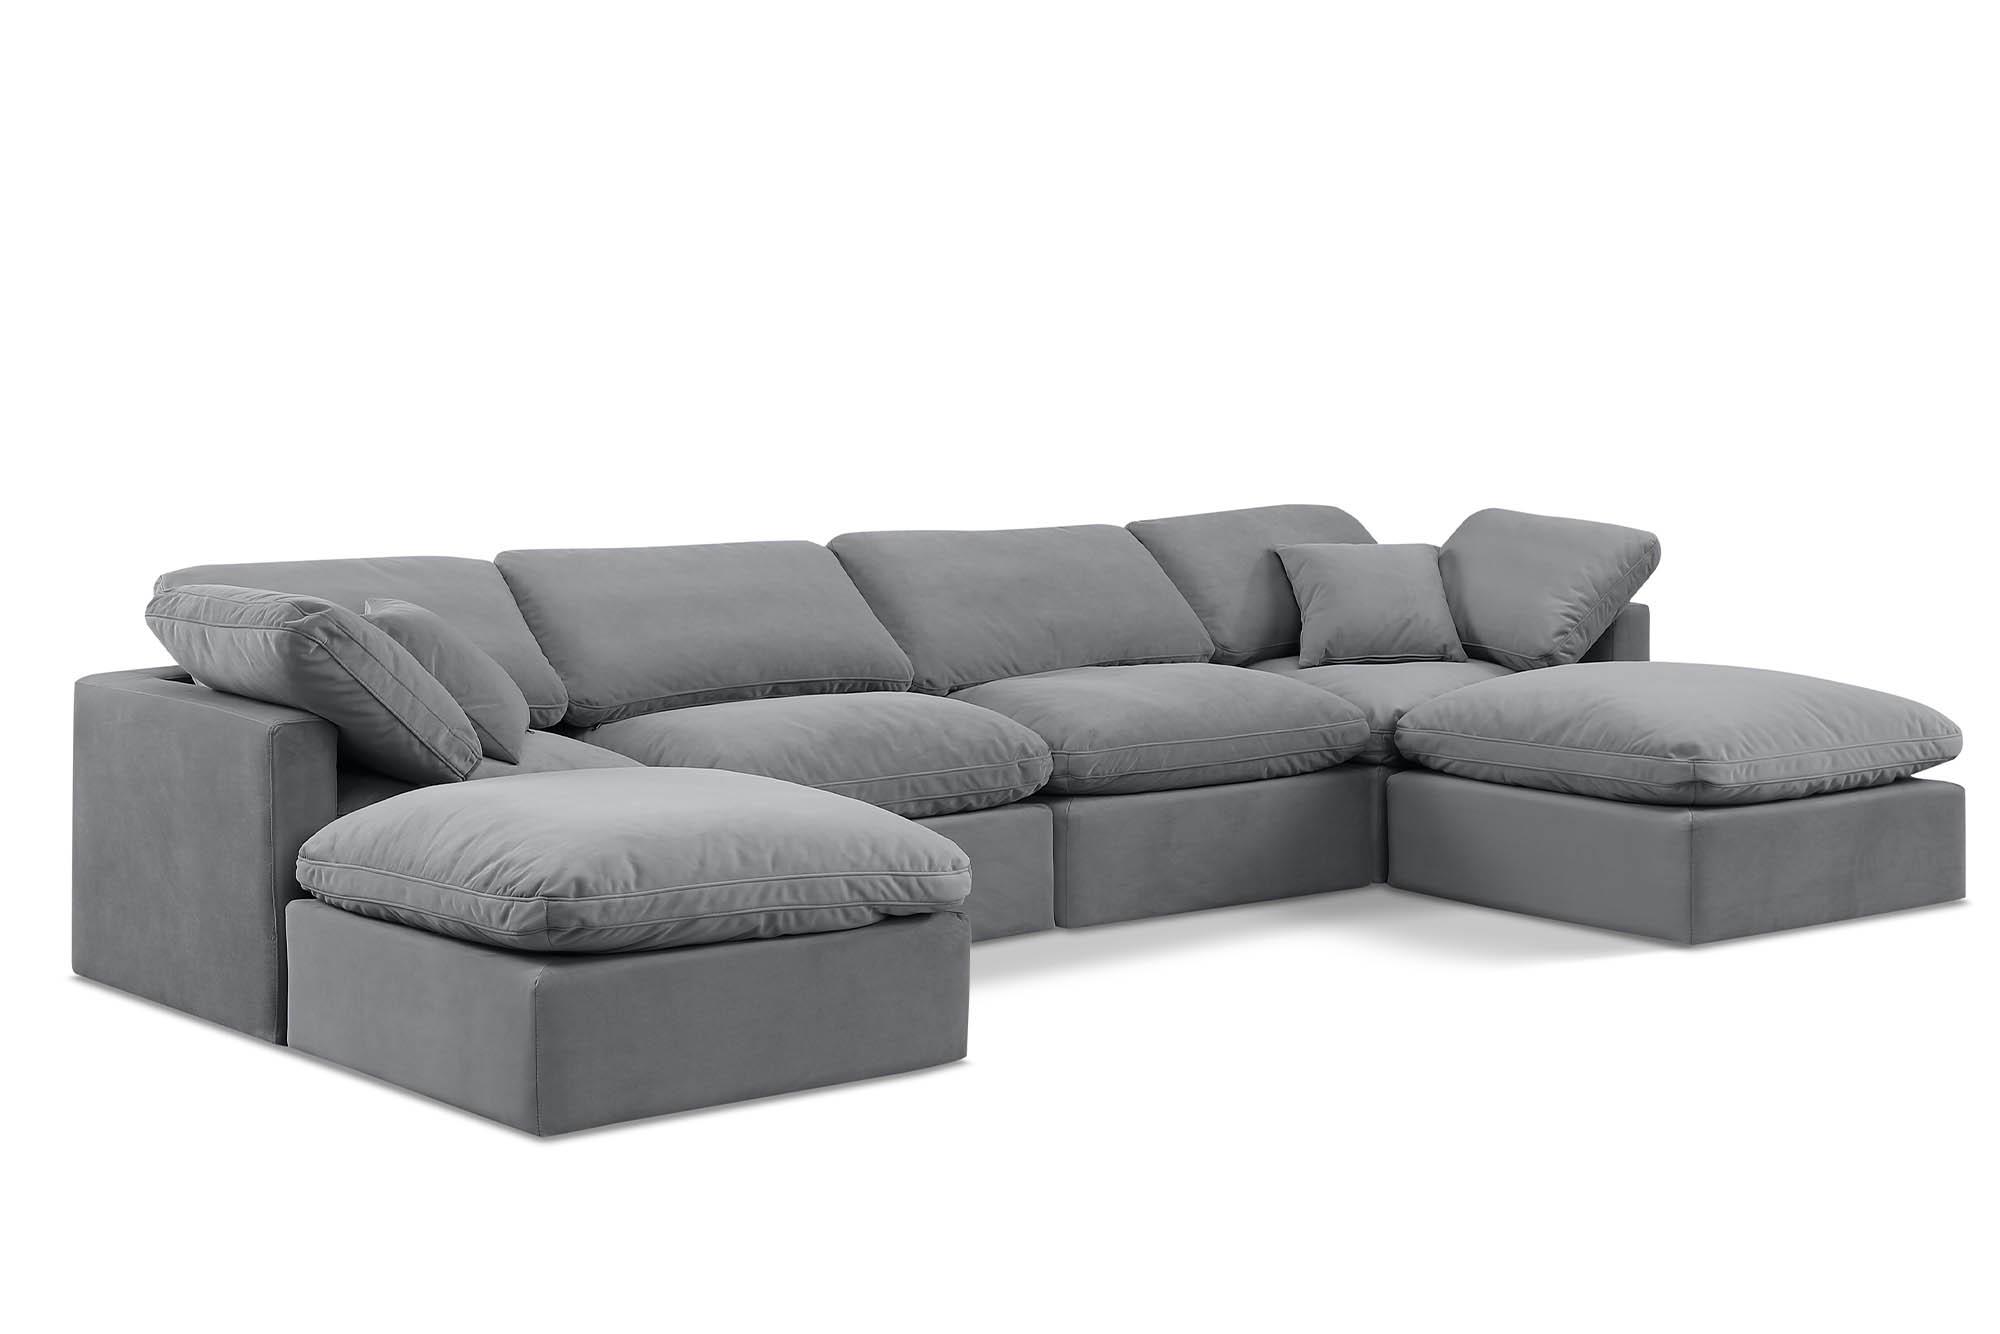 Contemporary, Modern Modular Sectional Sofa INDULGE 147Grey-Sec6B 147Grey-Sec6B in Gray Velvet